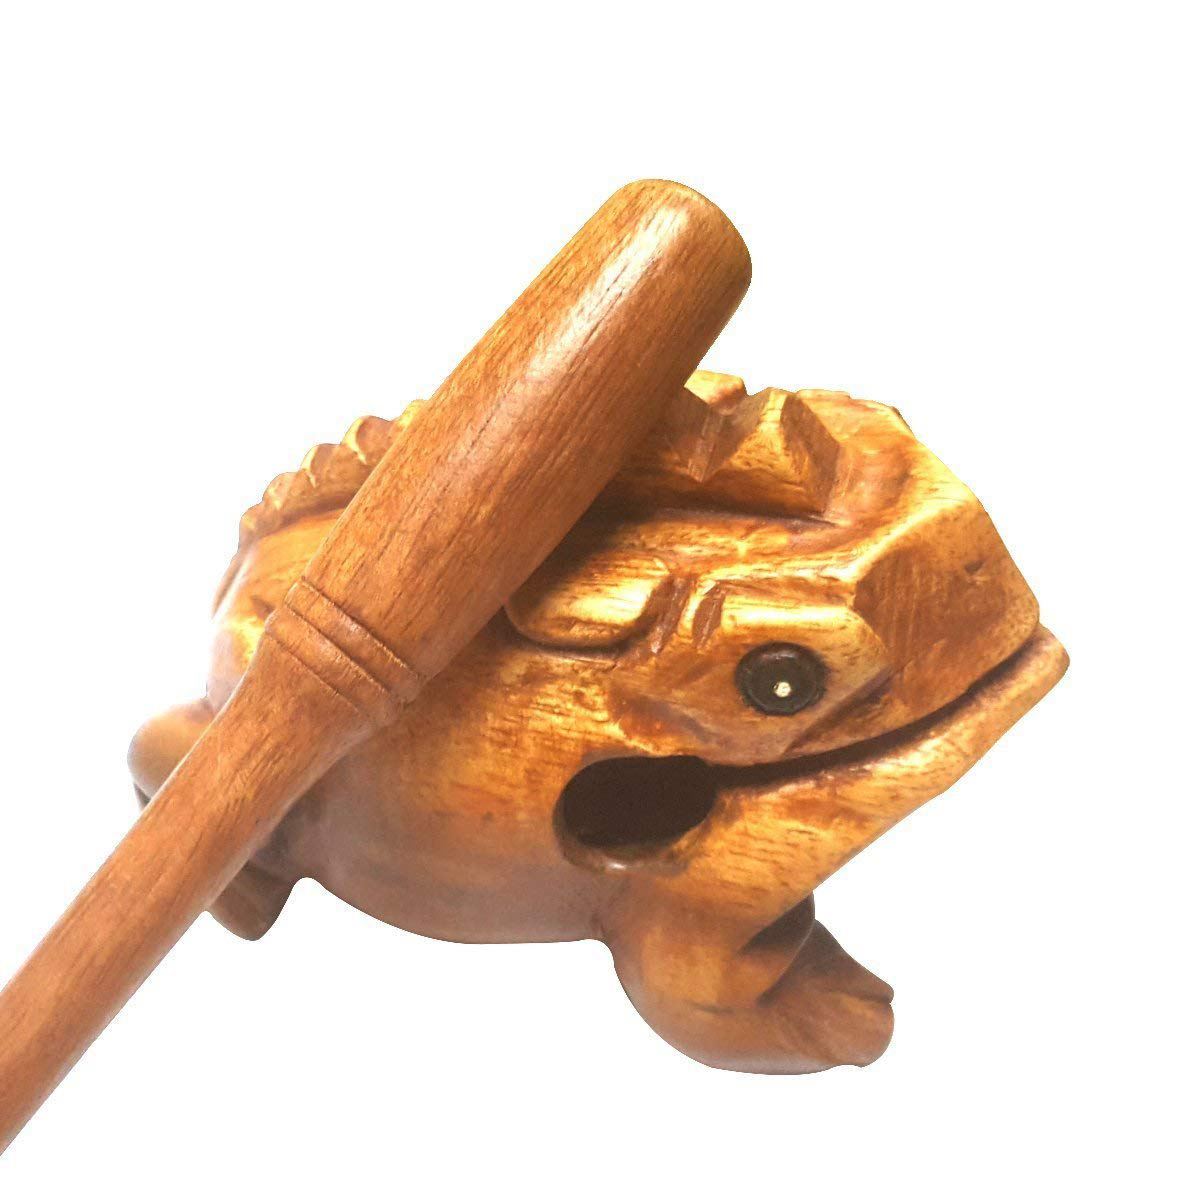 Medium 4 inch Wood Frog Guiro Rasp - Musical Instrument Tone Block